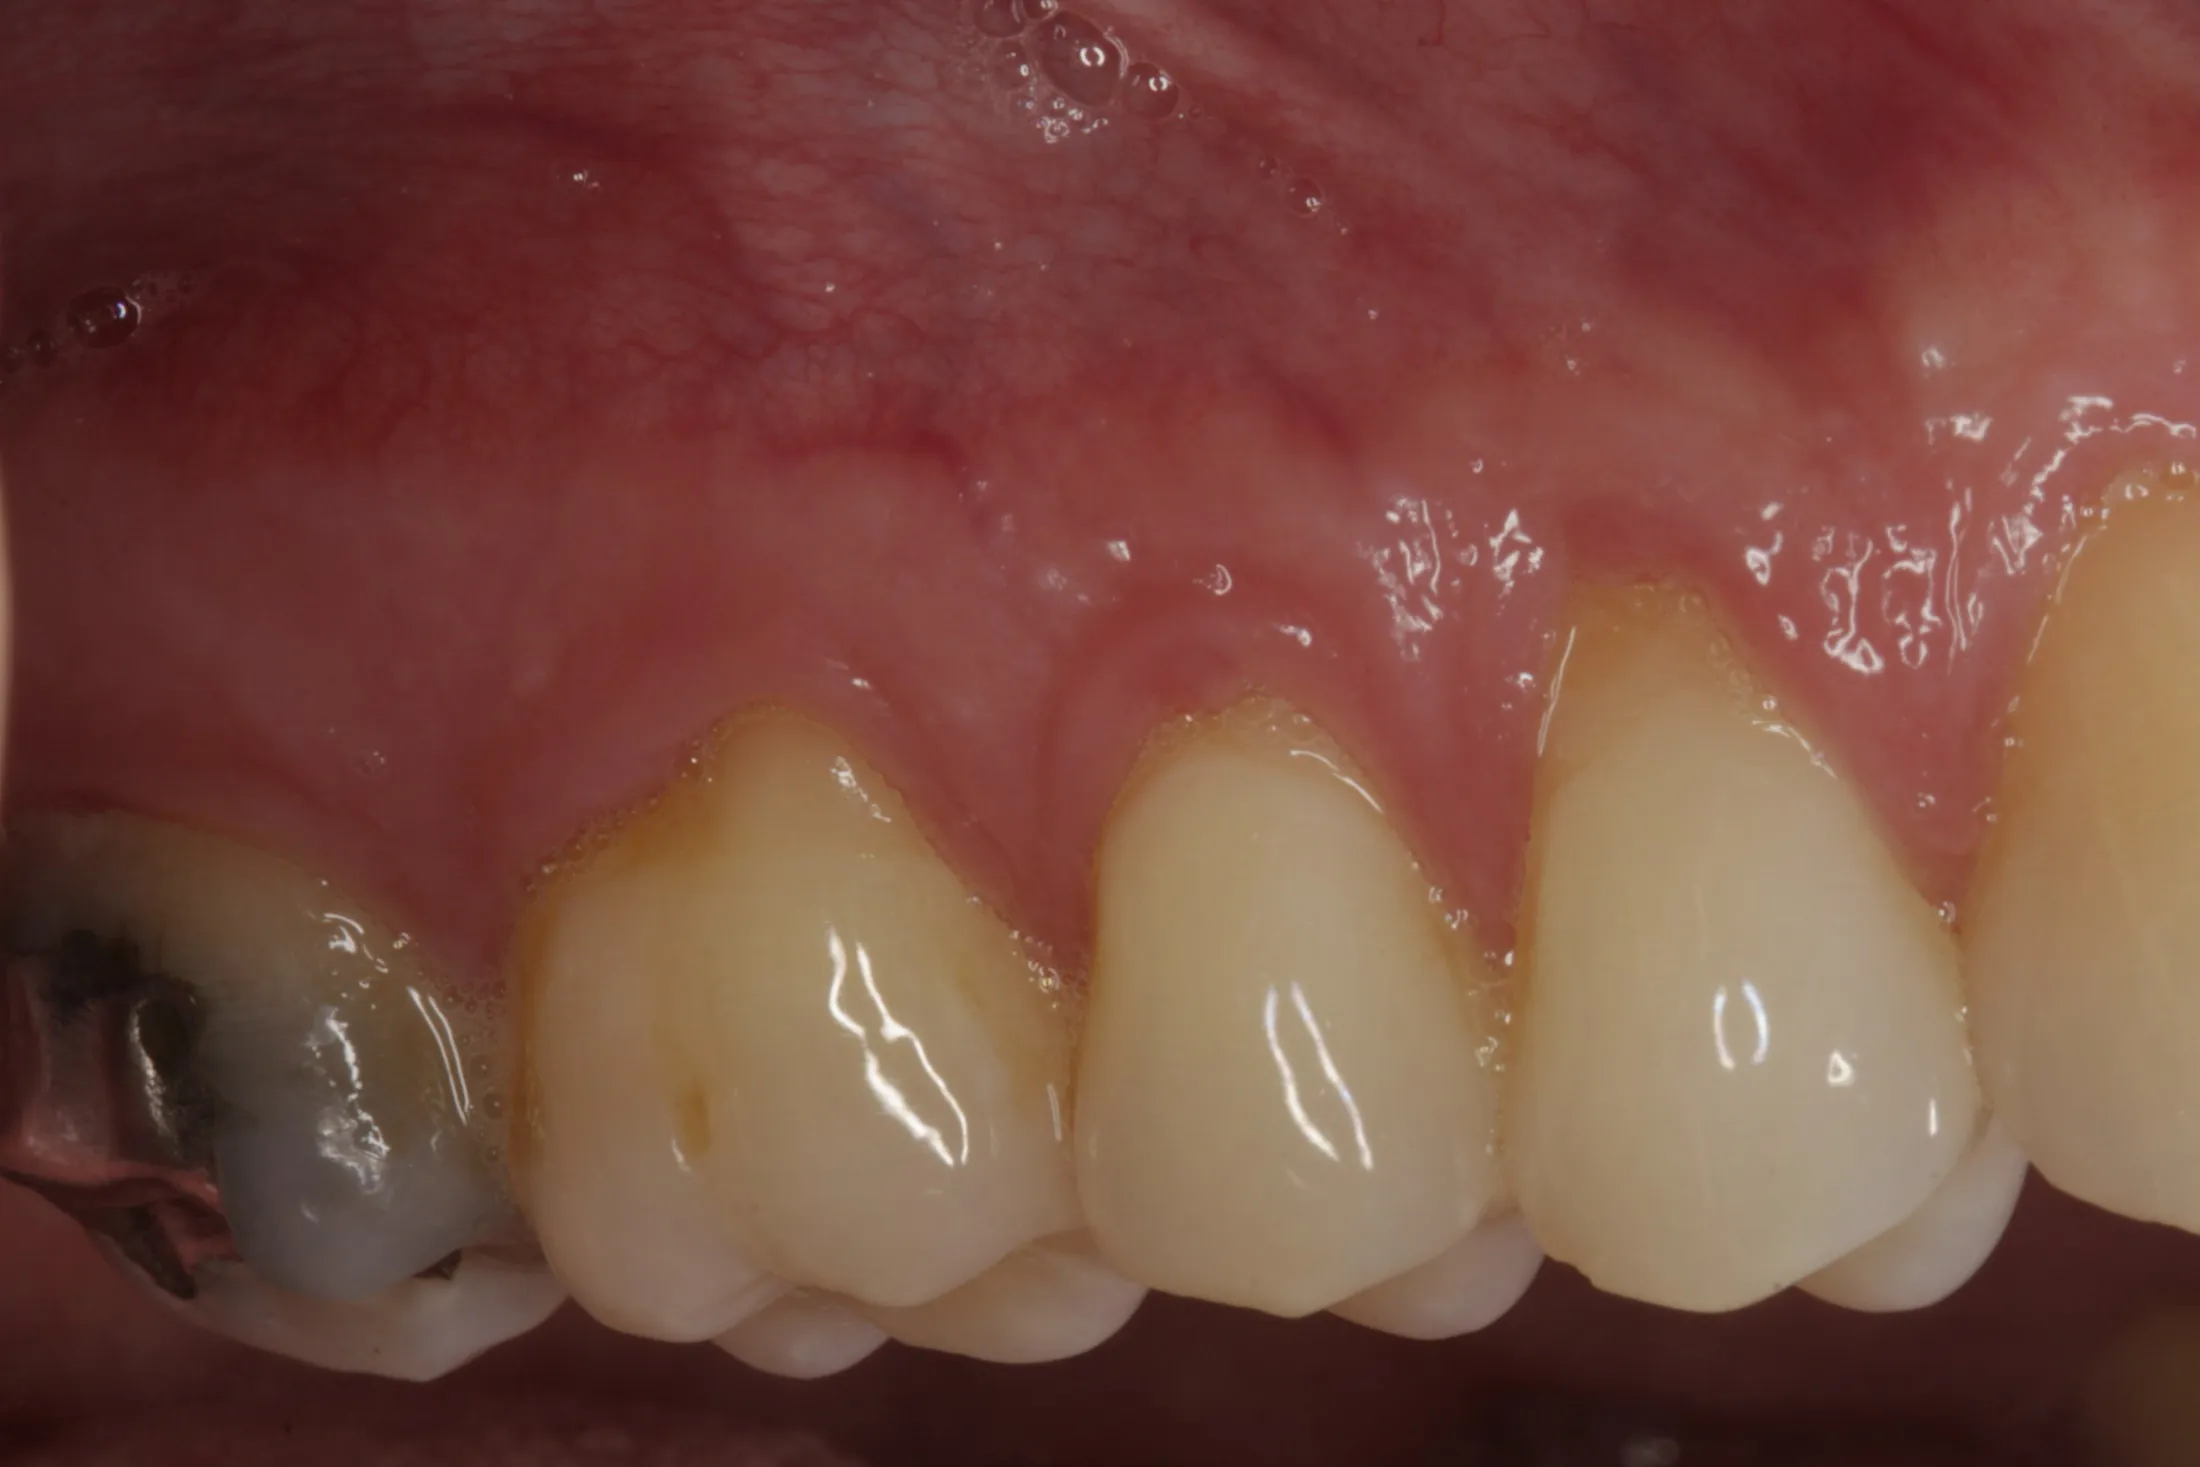 Pre-procedure image of gums prior to grafting treatment at Westport Periodontics.